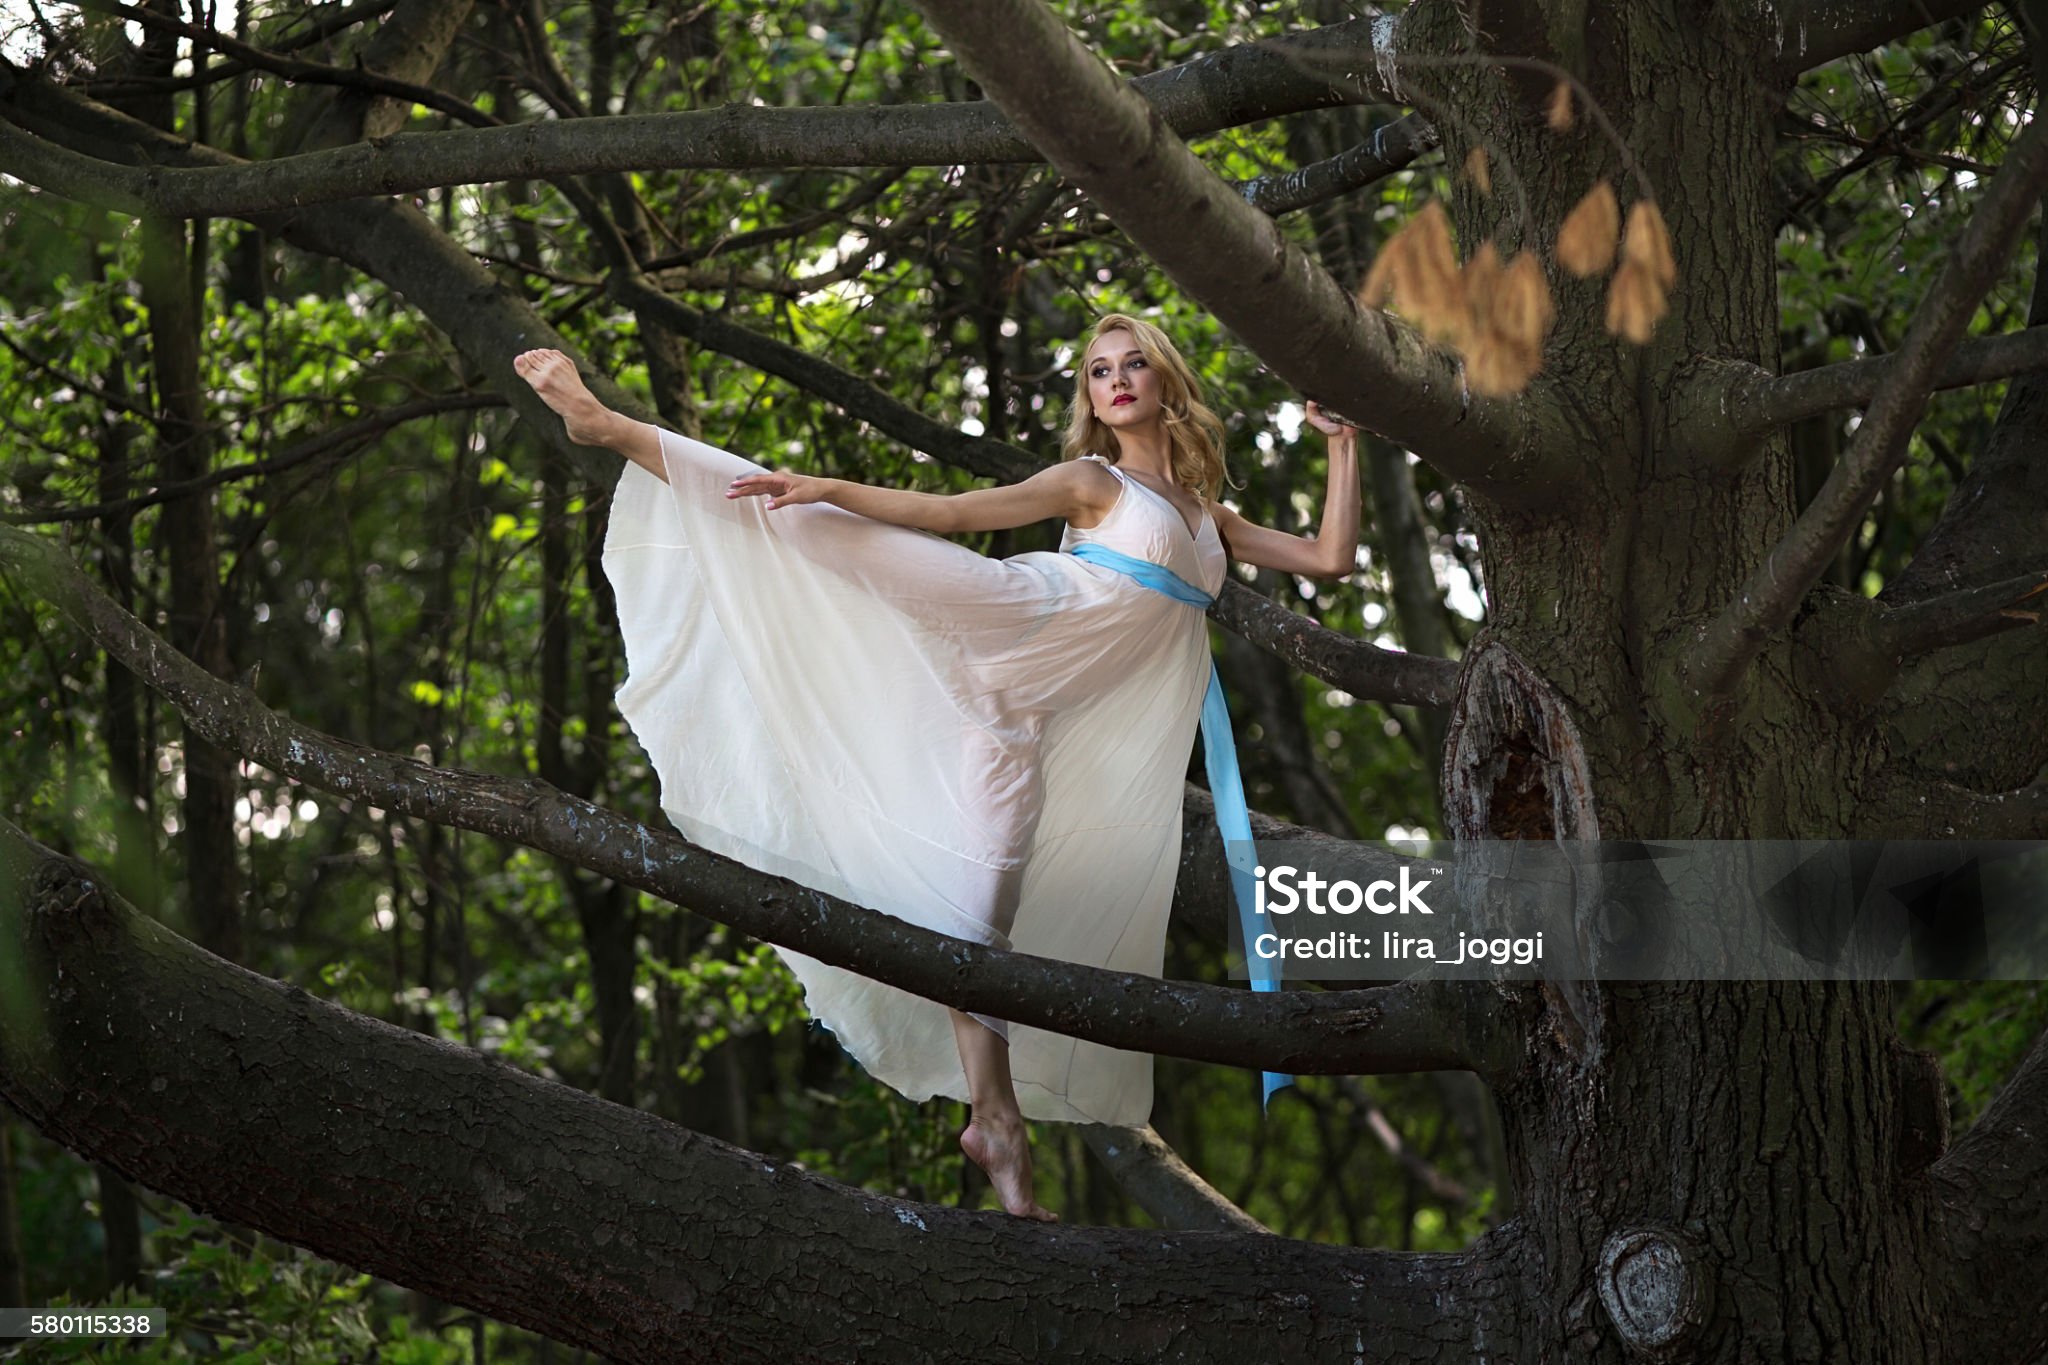 https://media.istockphoto.com/id/580115338/photo/ballerina-standing-in-arabesque-pose-on-a-big-tree.jpg?s=2048x2048&amp;w=is&amp;k=20&amp;c=G9BtQAHEaNR_GKReJPIkTHJDfhYH2qRvNyswf2g9uN0=